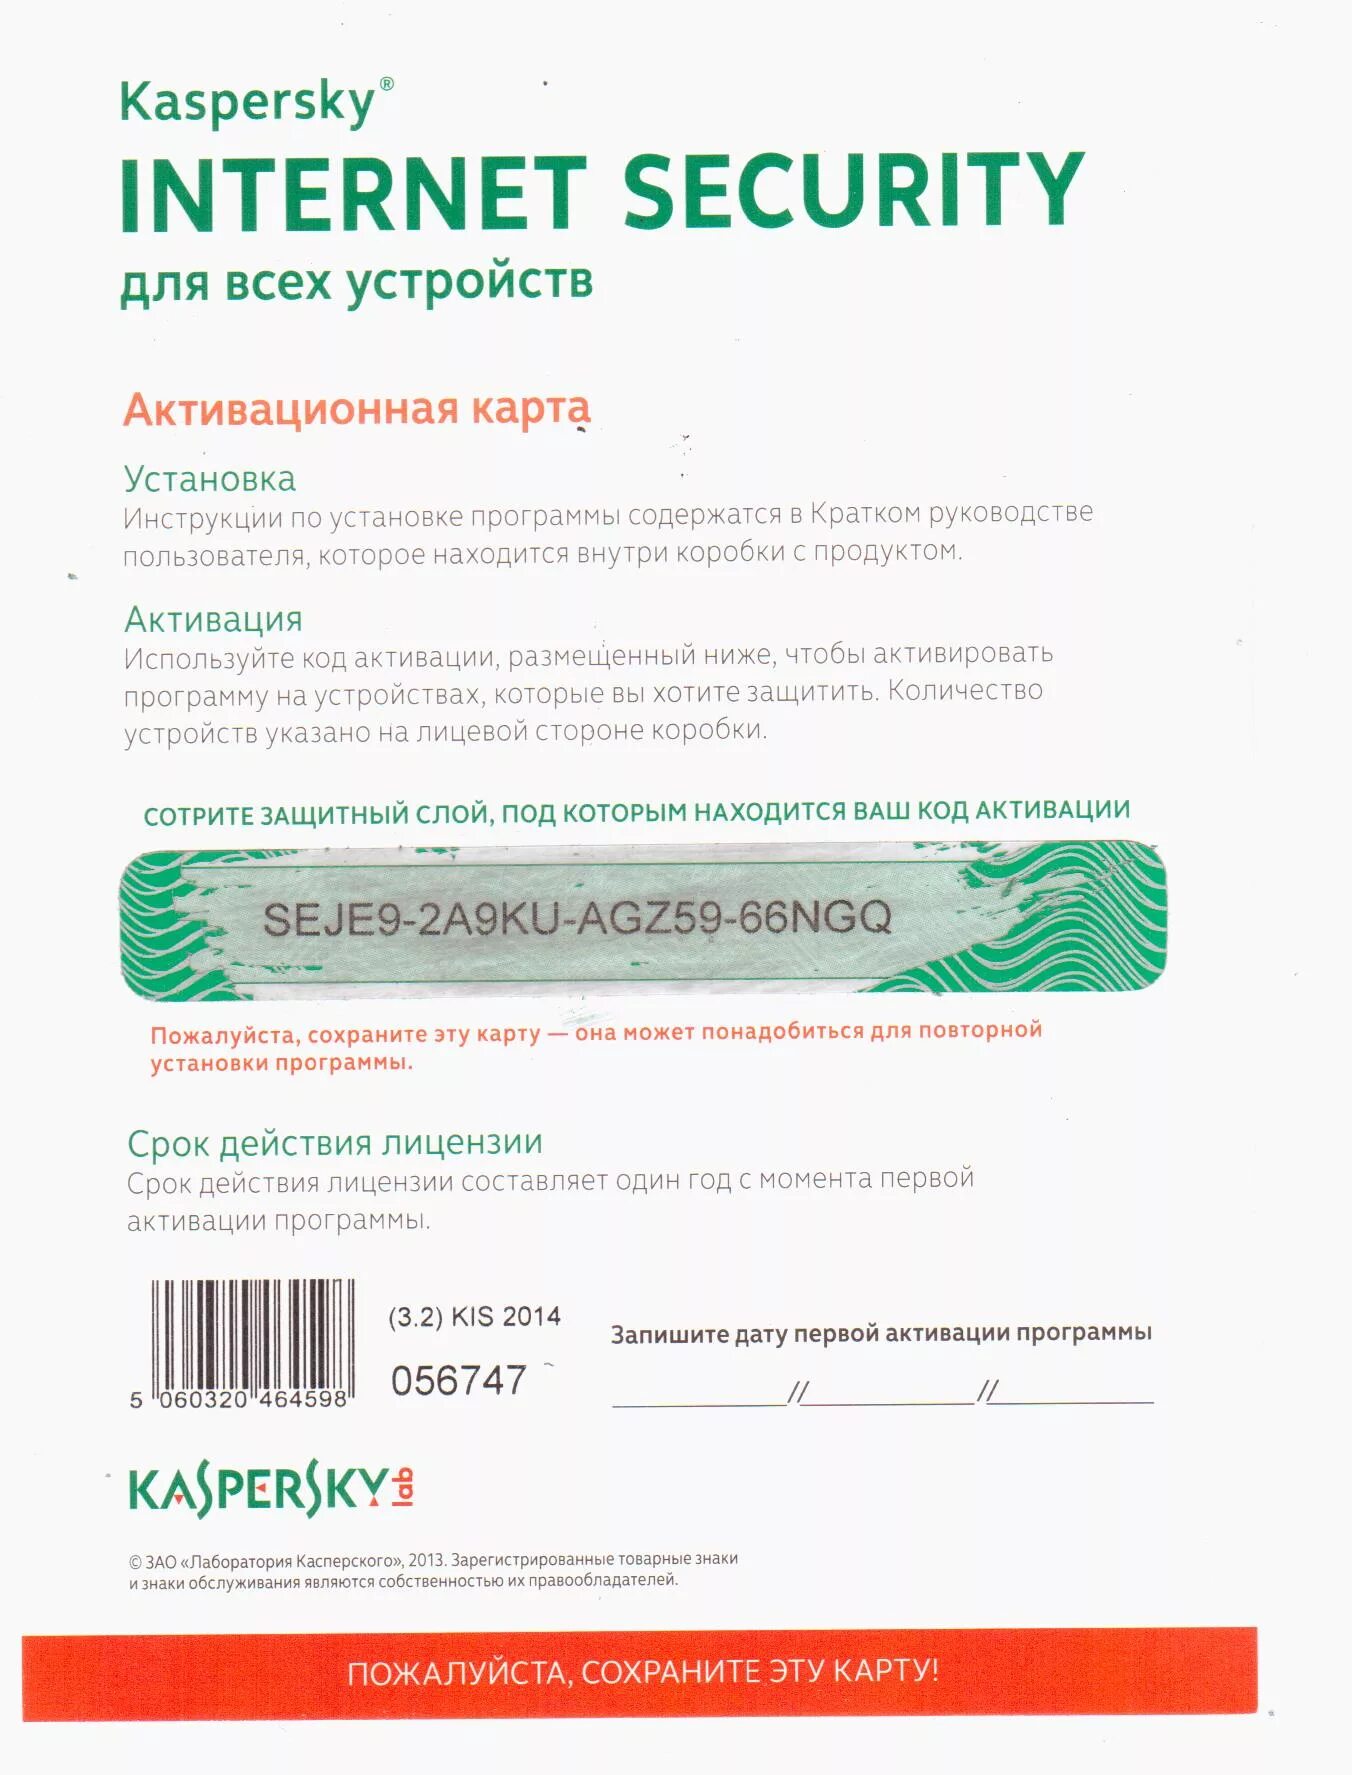 Kaspersky root certificate. Лицензия Kaspersky. Сертификат Касперский. Kaspersky сертификат лицензии. Активация Касперского по сертификату.